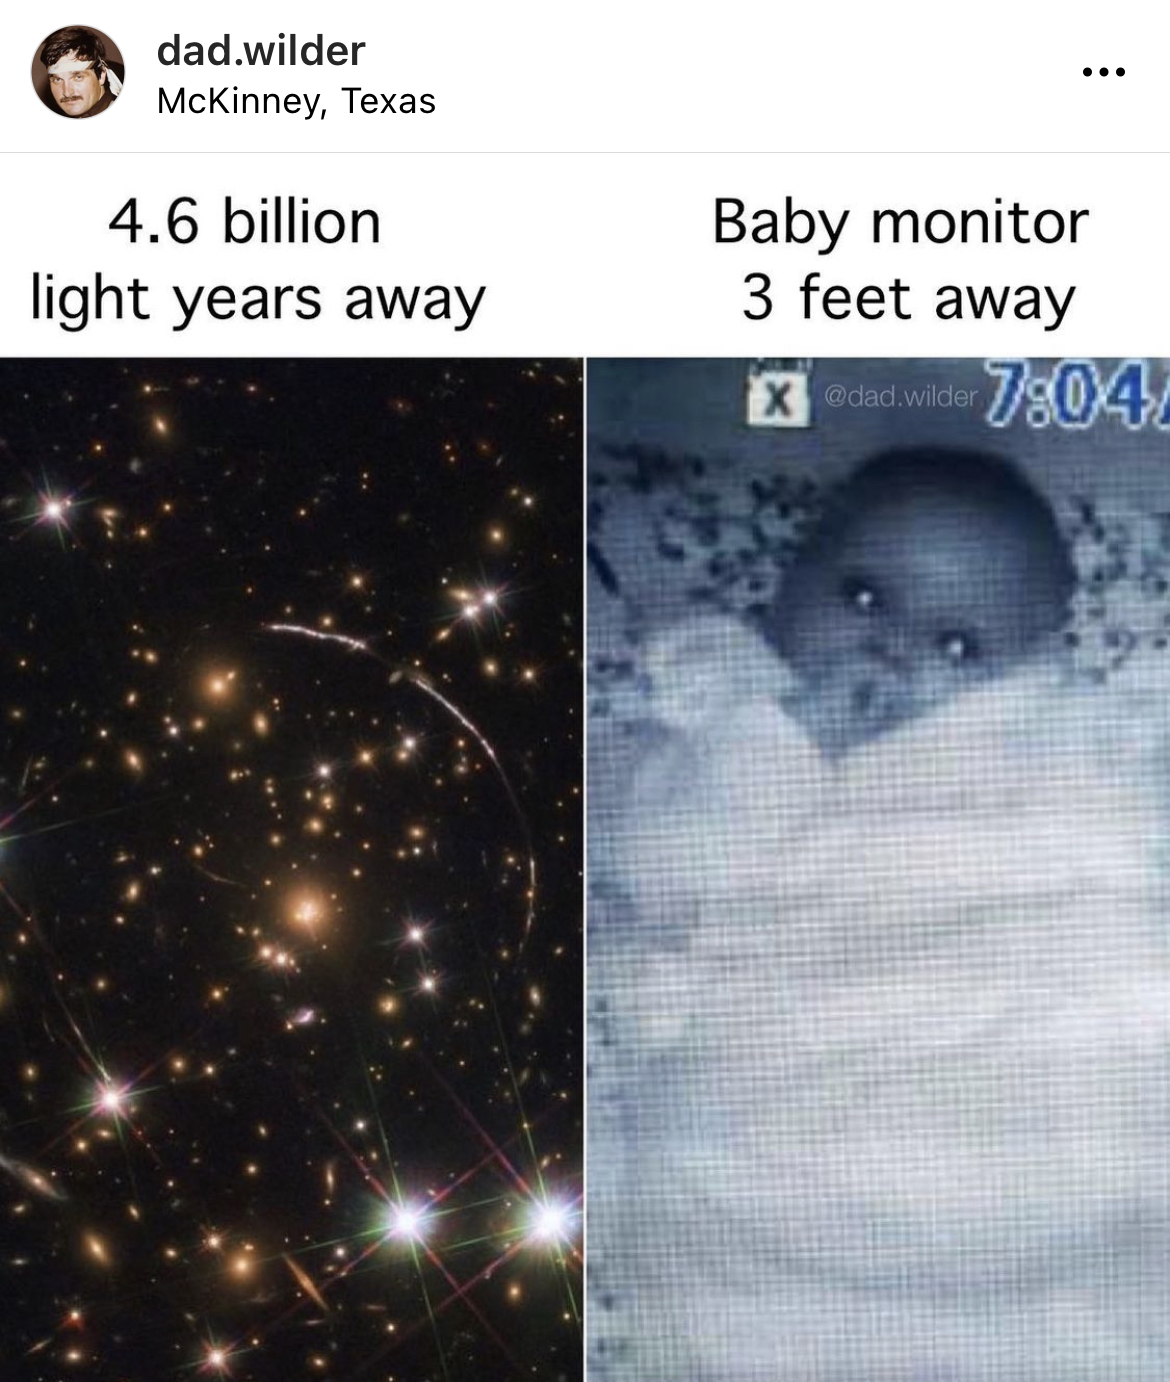 James Webb Telescope Memes - sunburst arc galaxy - dad.wilder McKinney, Texas 4.6 billion light years away Baby monitor 3 feet away X.wilder